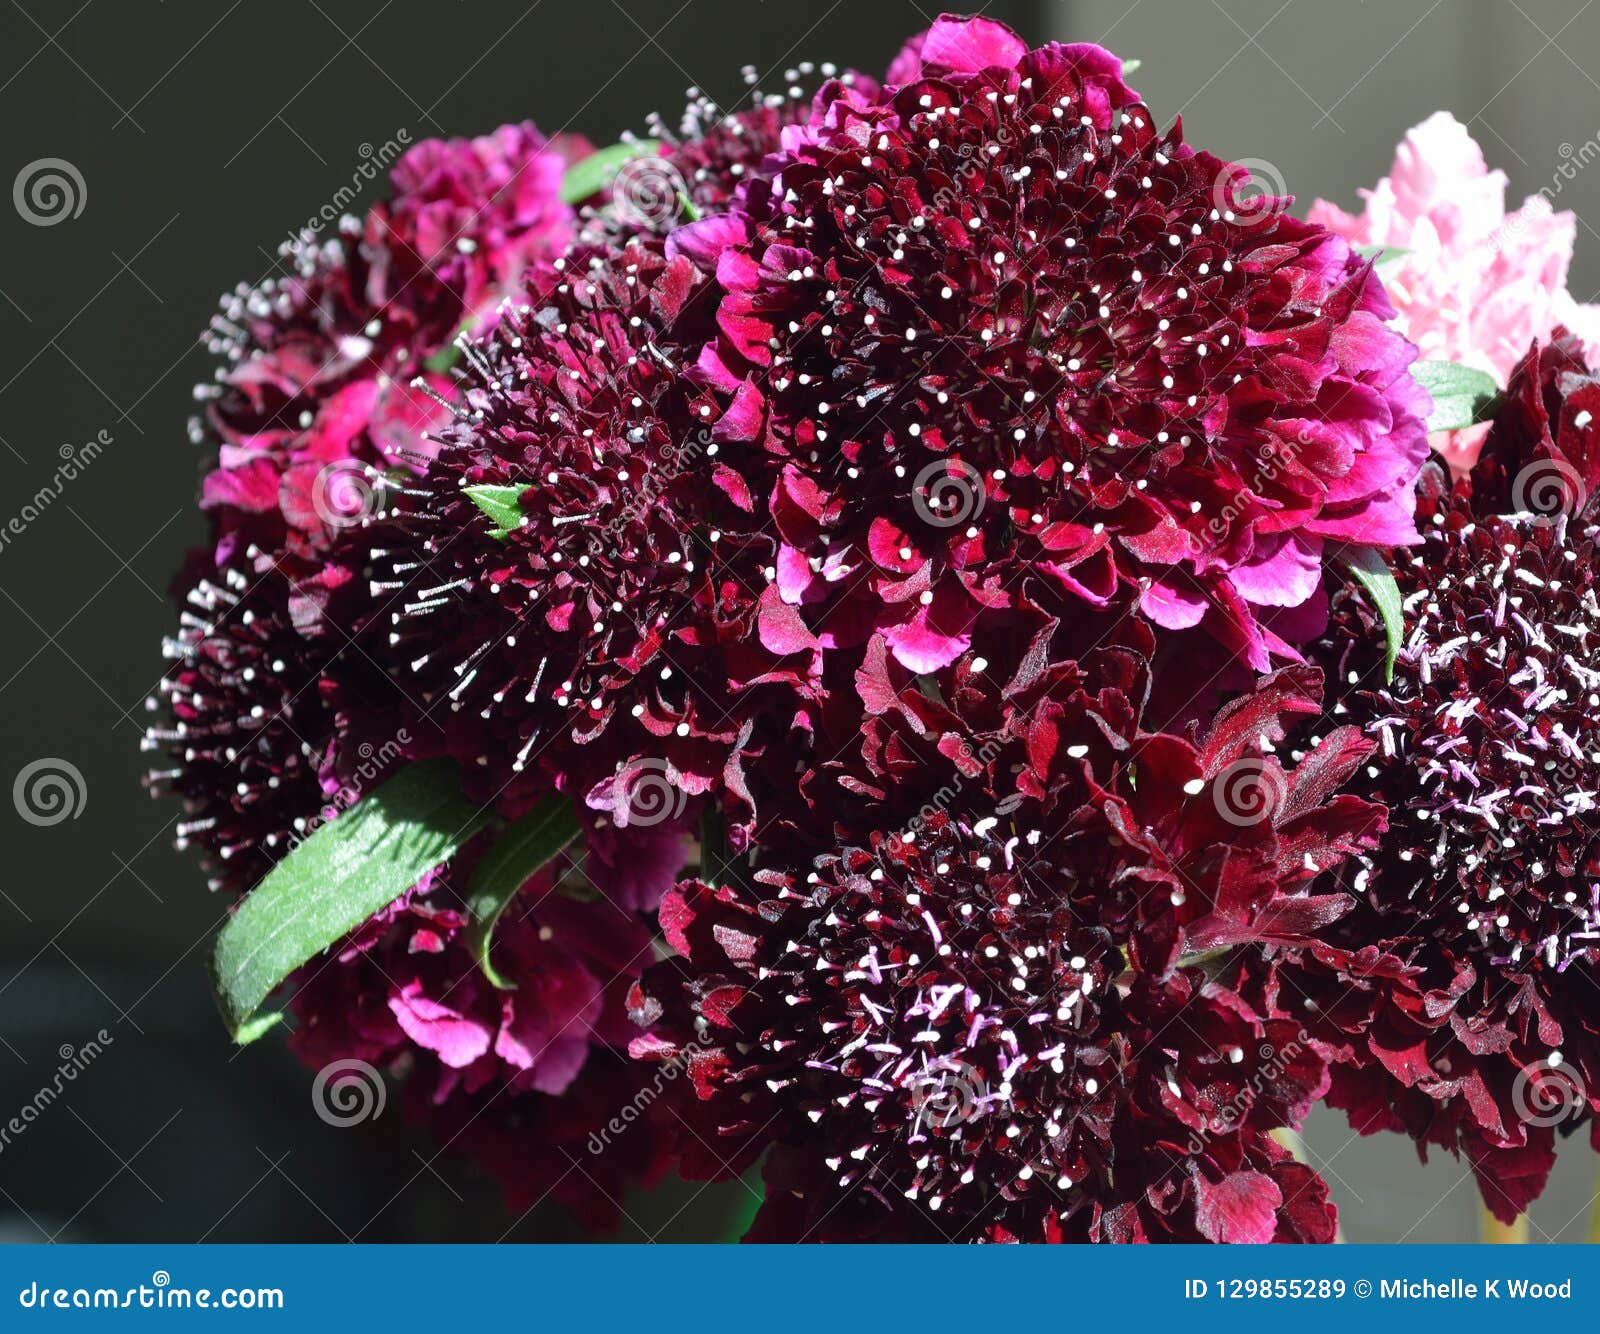 Black Pompom Black Knight Pincushion Flower Bouquet Stock Image Image Of Flowering Closeup 129855289